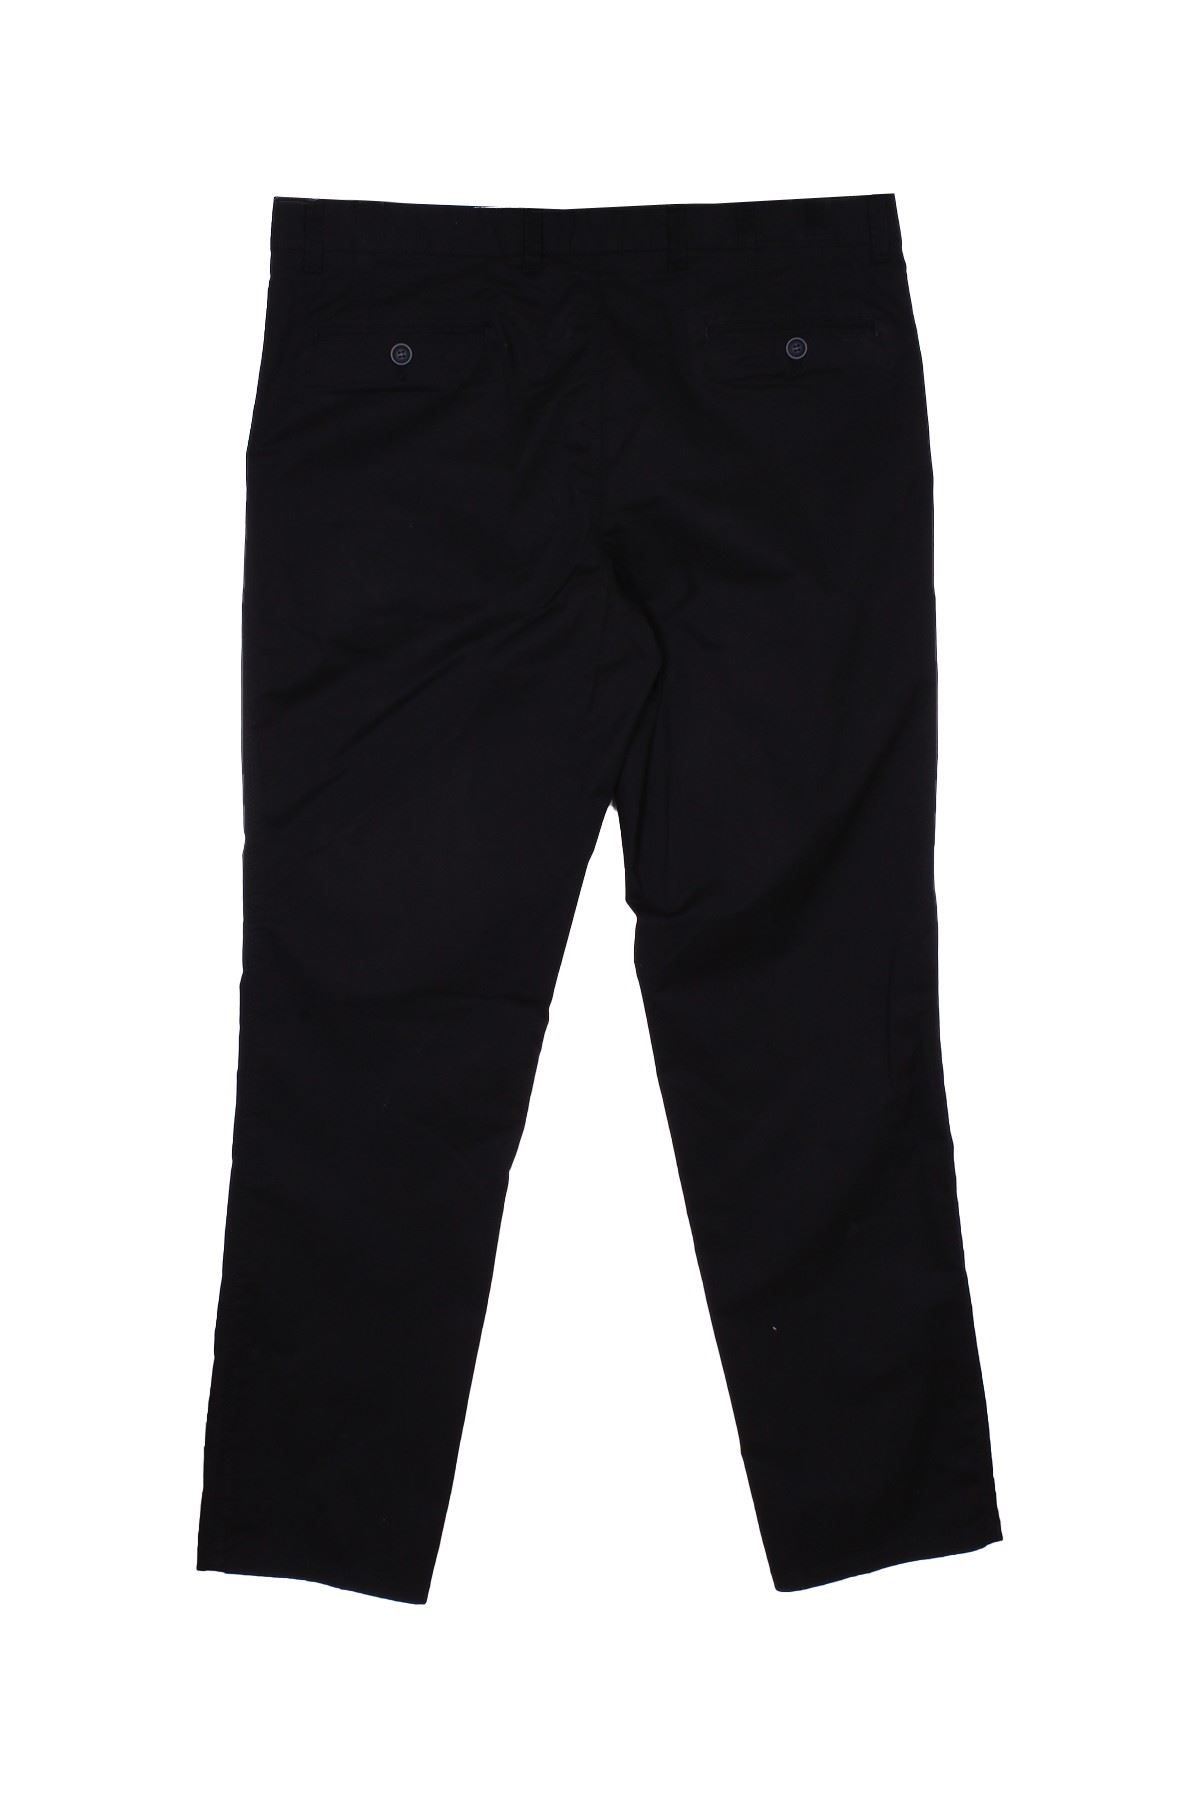 Giyinsen Erkek Siyah Kanvas Pantolon - 23KA50000002